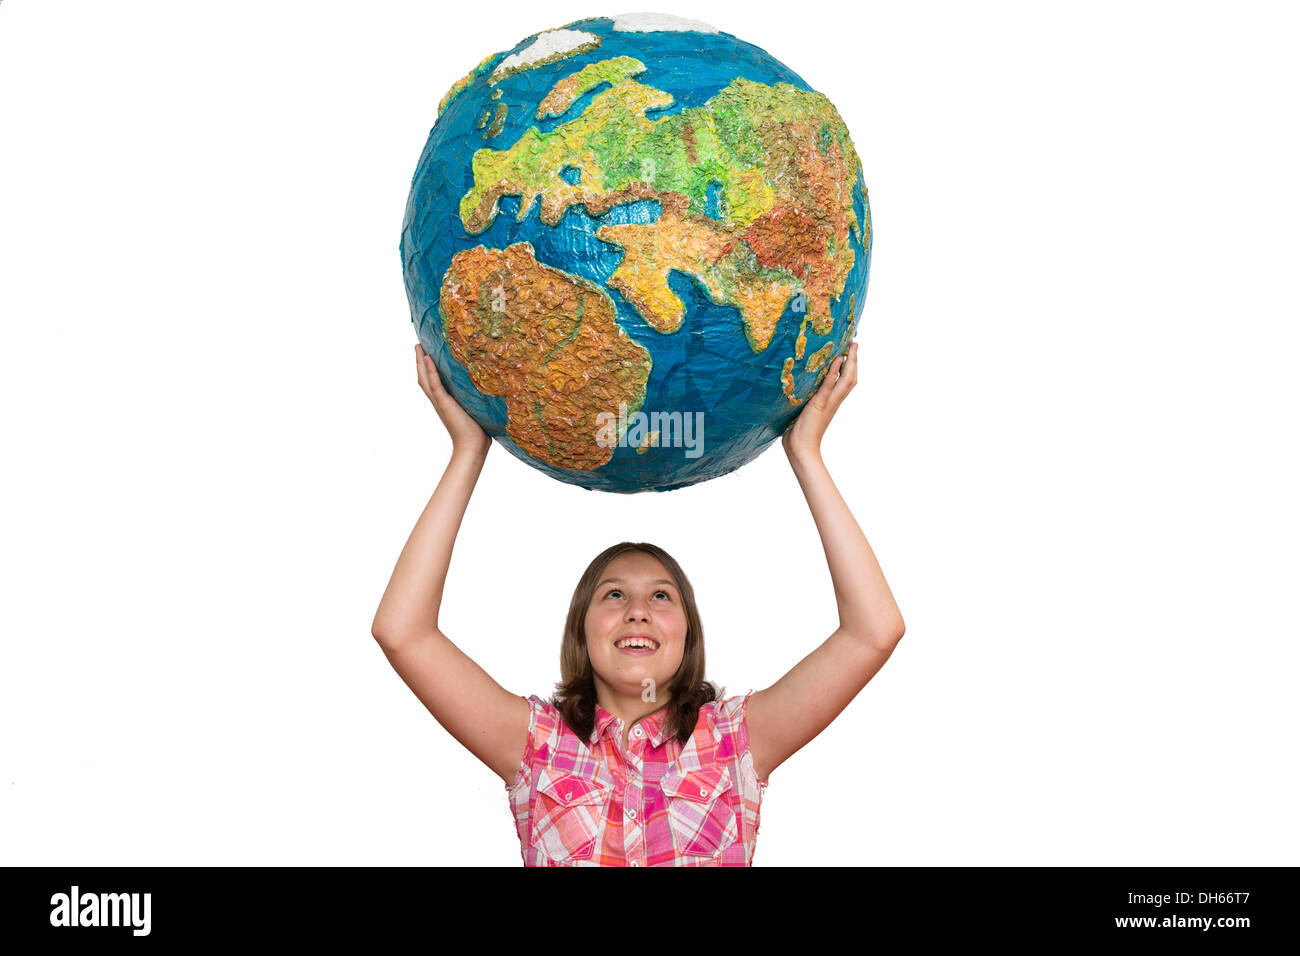 Girl holding up a large globe, Germany Stock Photo